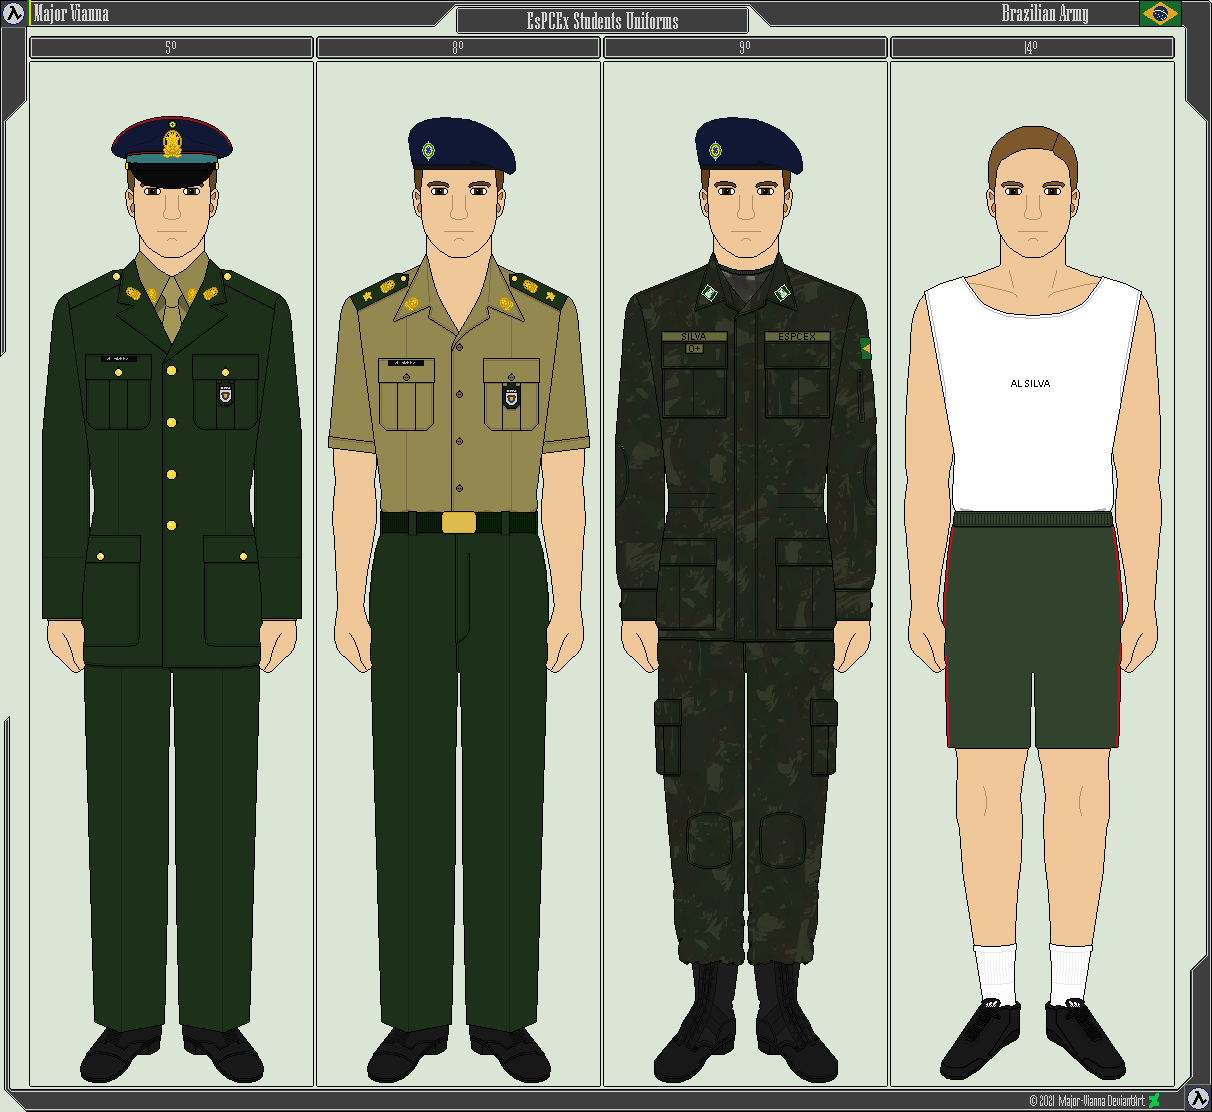 Brazilian Army Uniforms - EsPCEx by Major-Vianna on DeviantArt